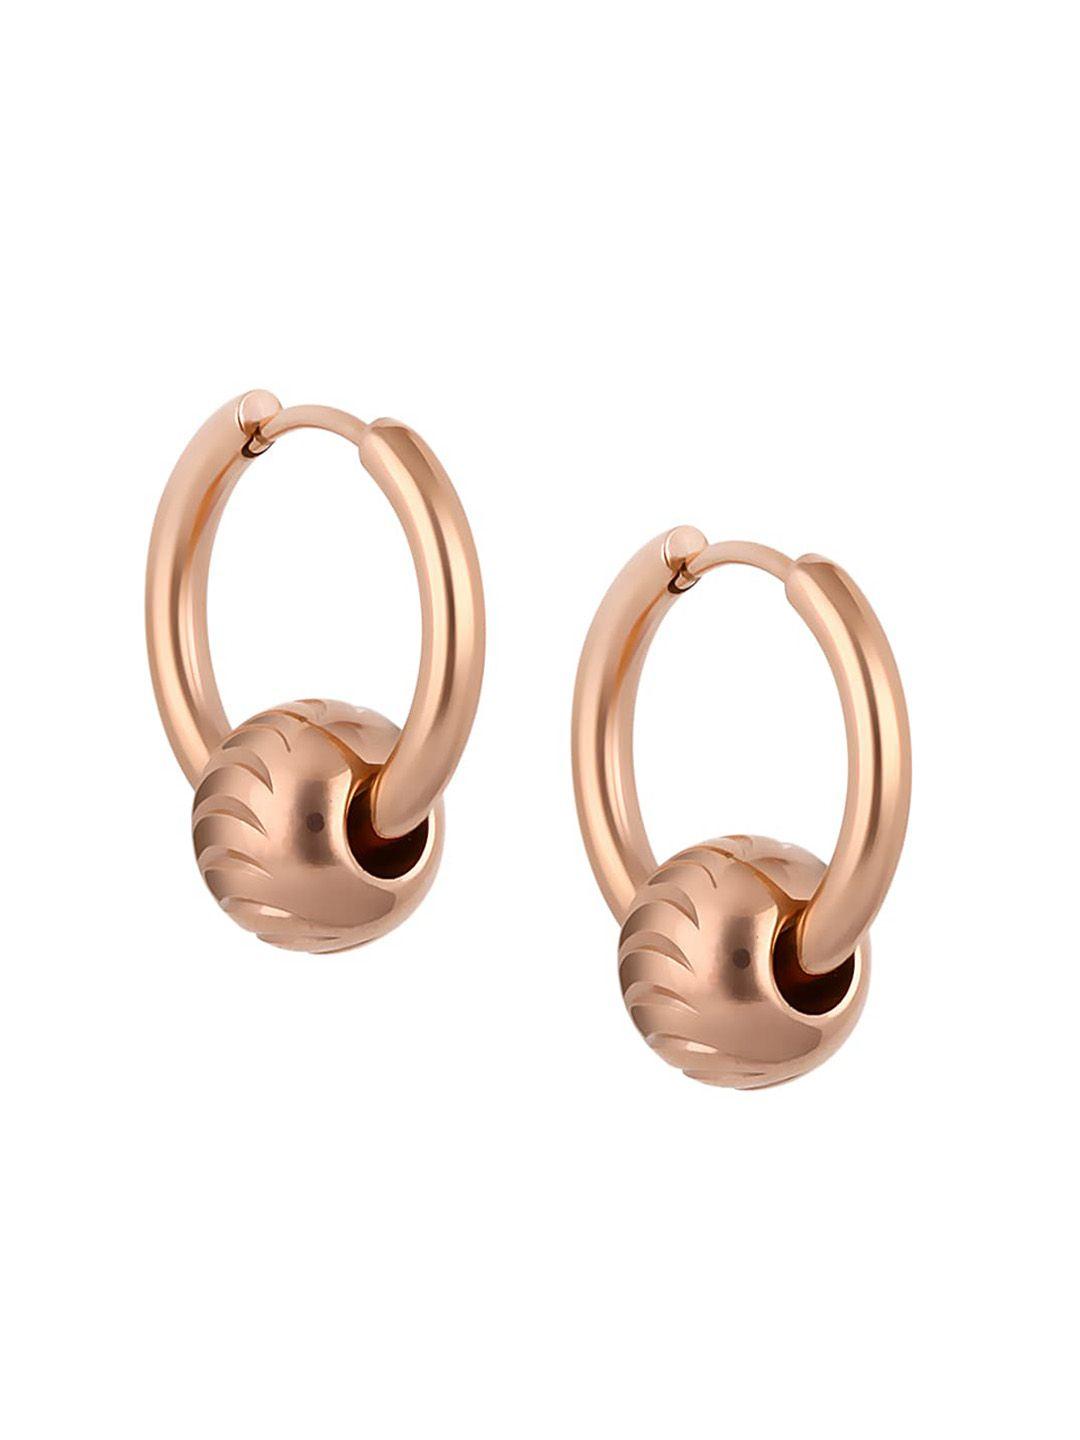 daniel klein rose gold contemporary studs earrings